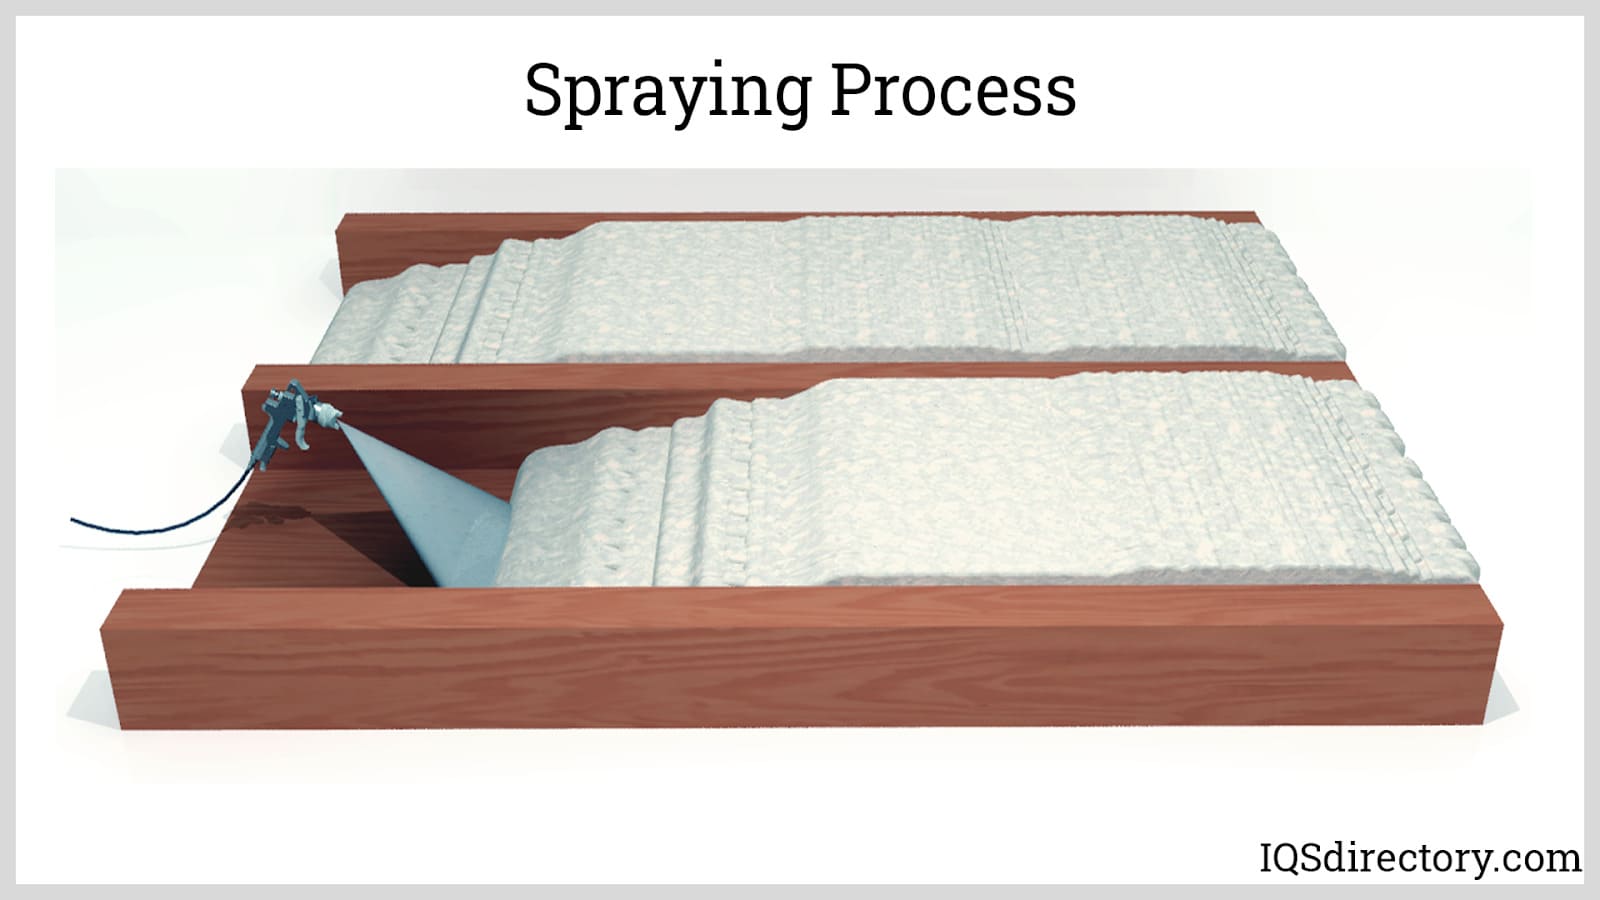 Spraying Process